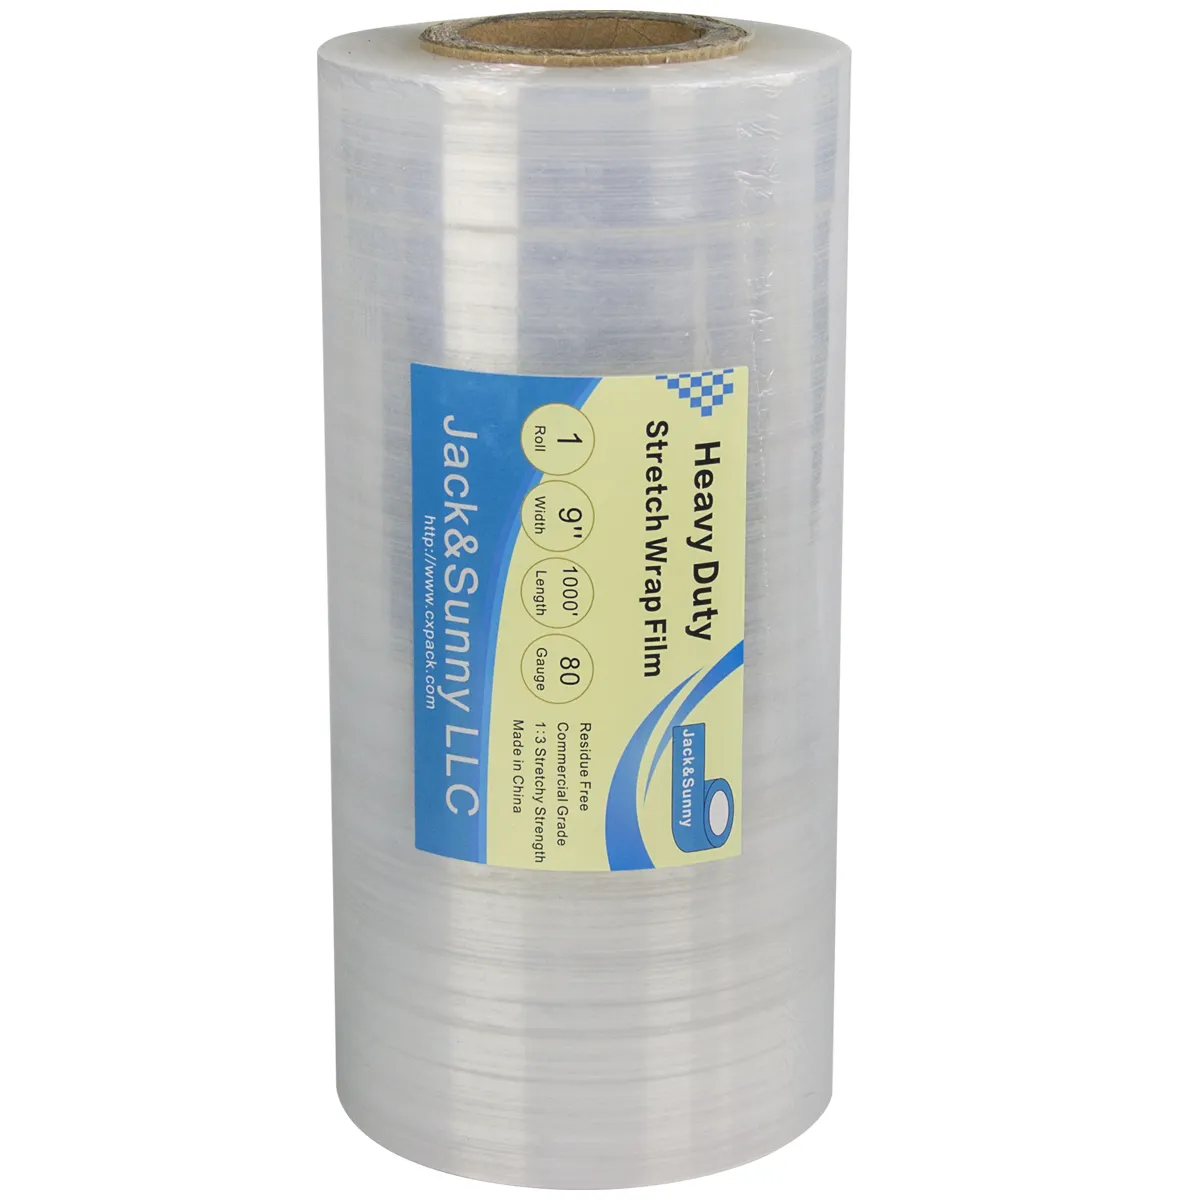 Lldpe pellicola di plastica trasparente rolls stretch wrap